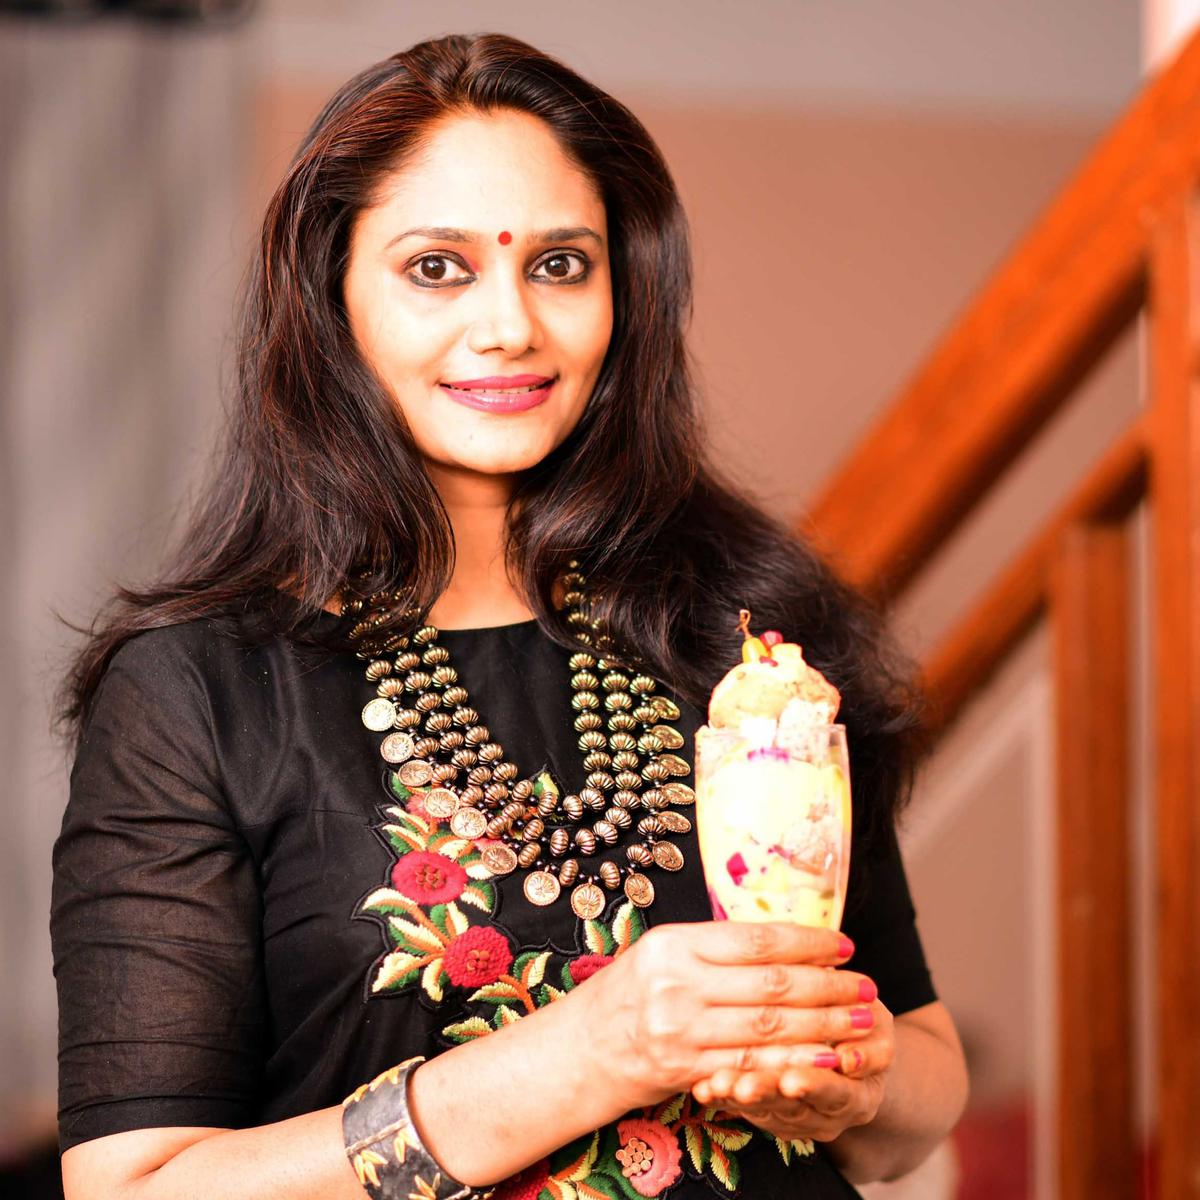 Priya Kolassery, who runs Colamas Kitchen